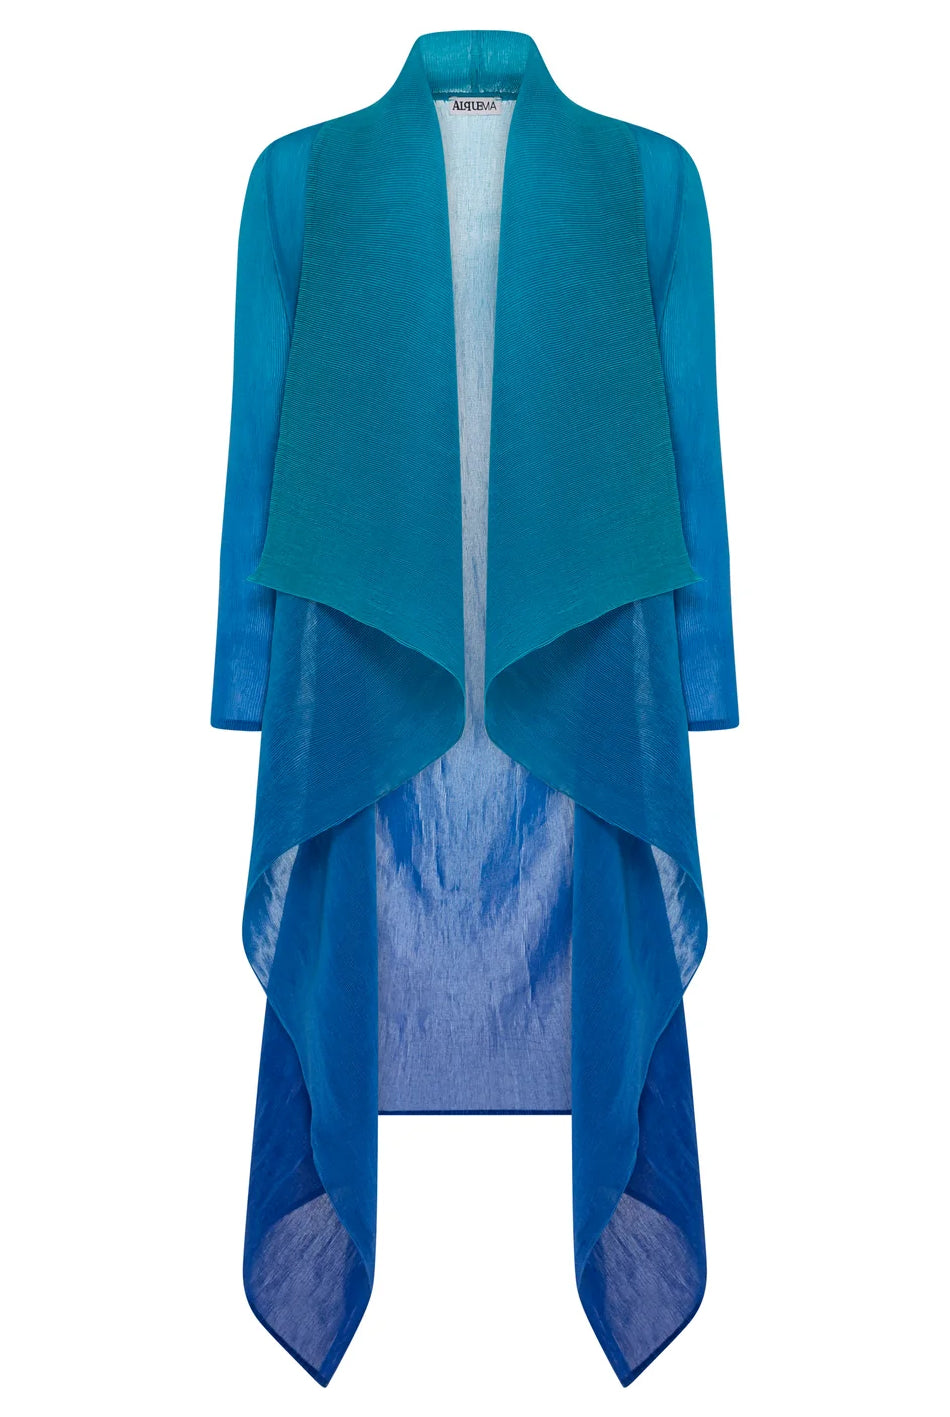 ALQUEMA - Collare Coat Ombre Blue Bird to Dazzling Blue - Magpie Style